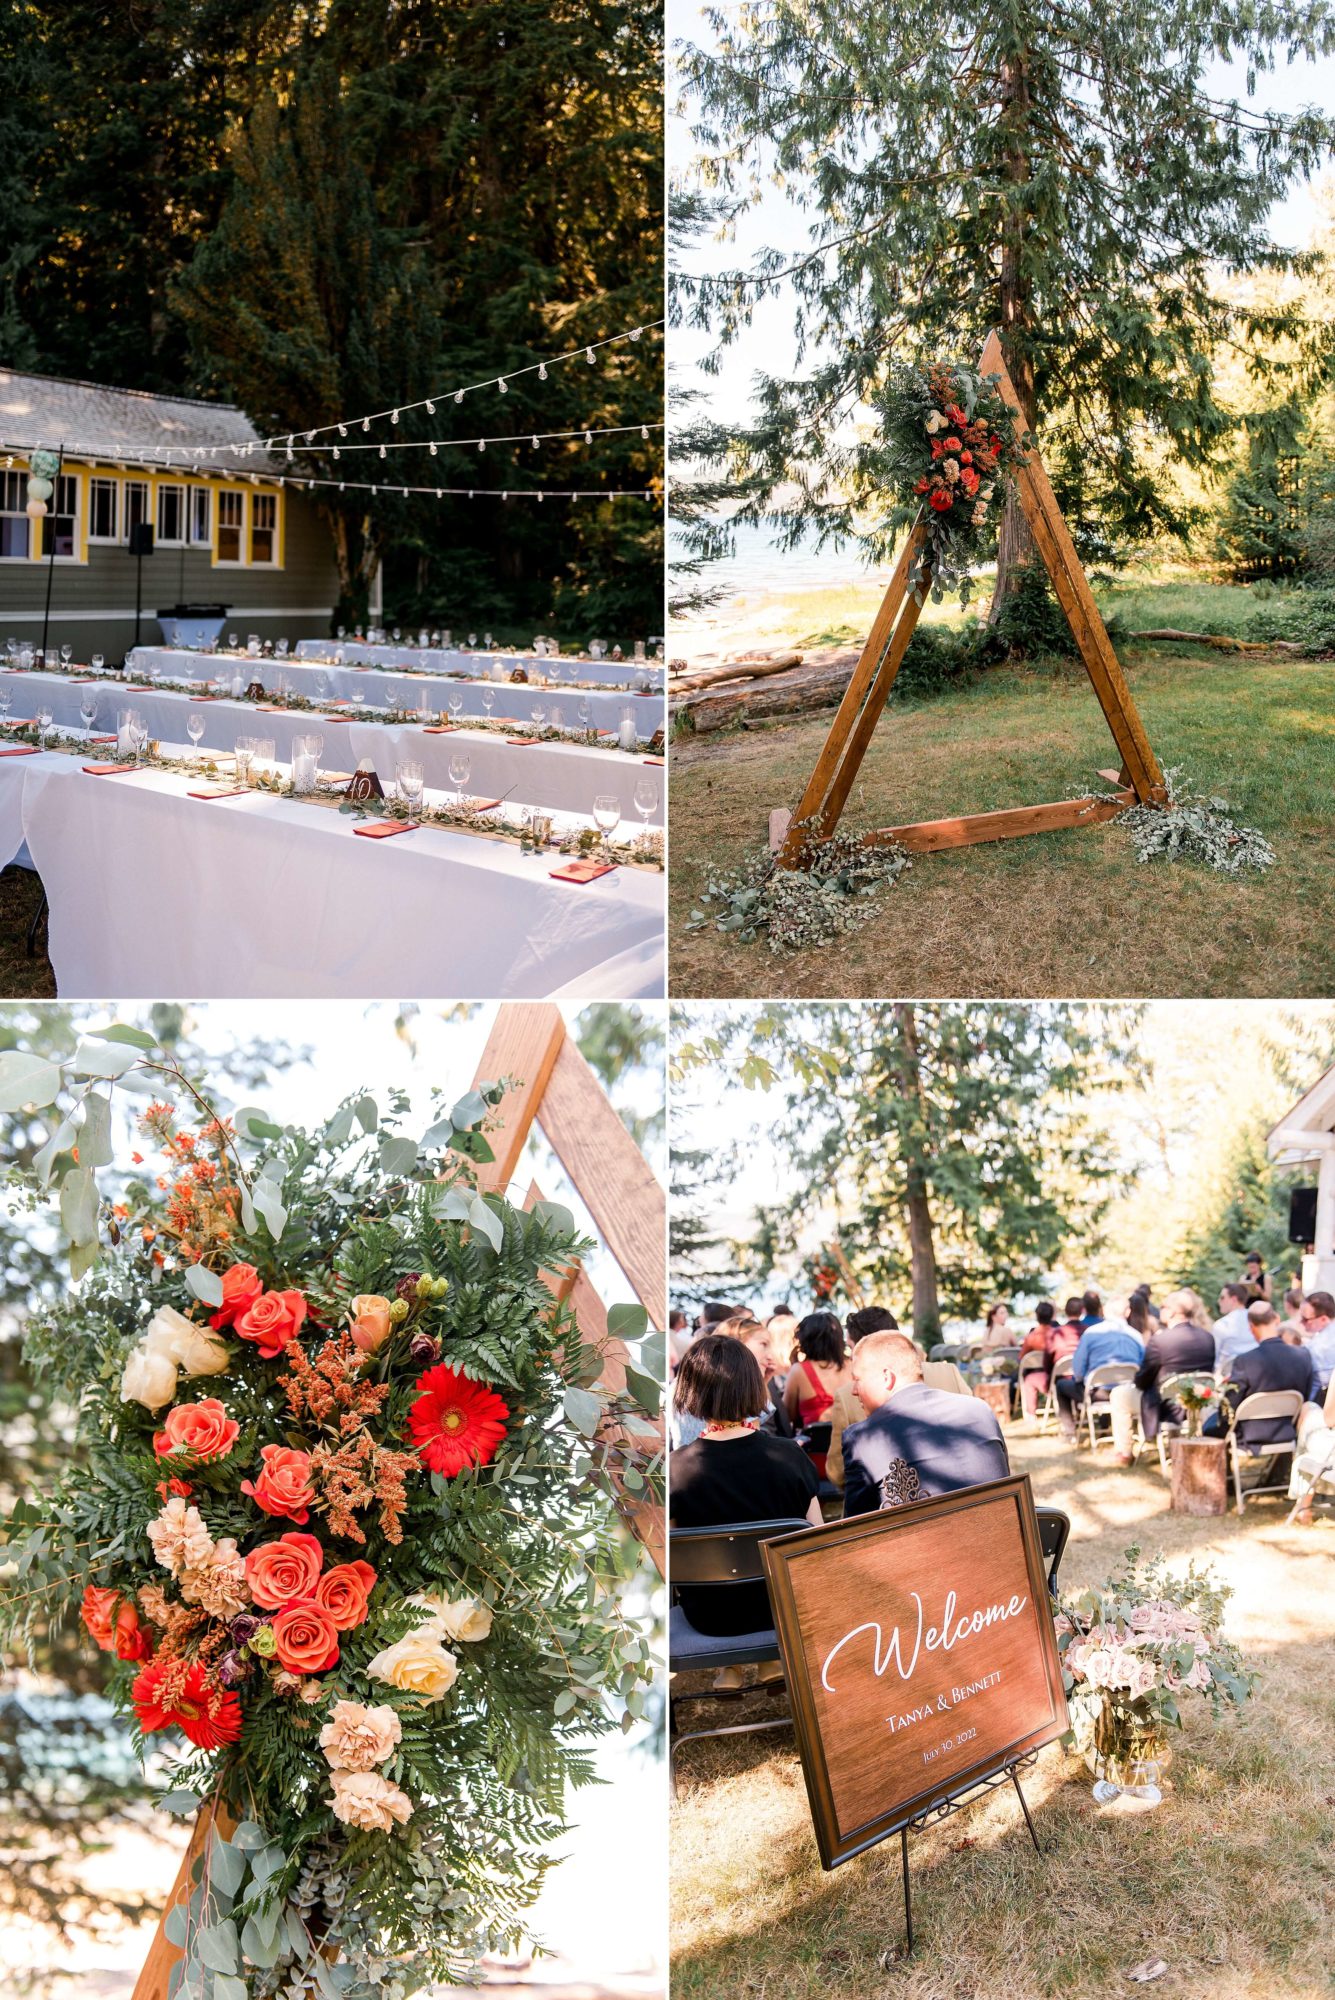 NatureBridge Outdoor wedding ceremony and reception decor.